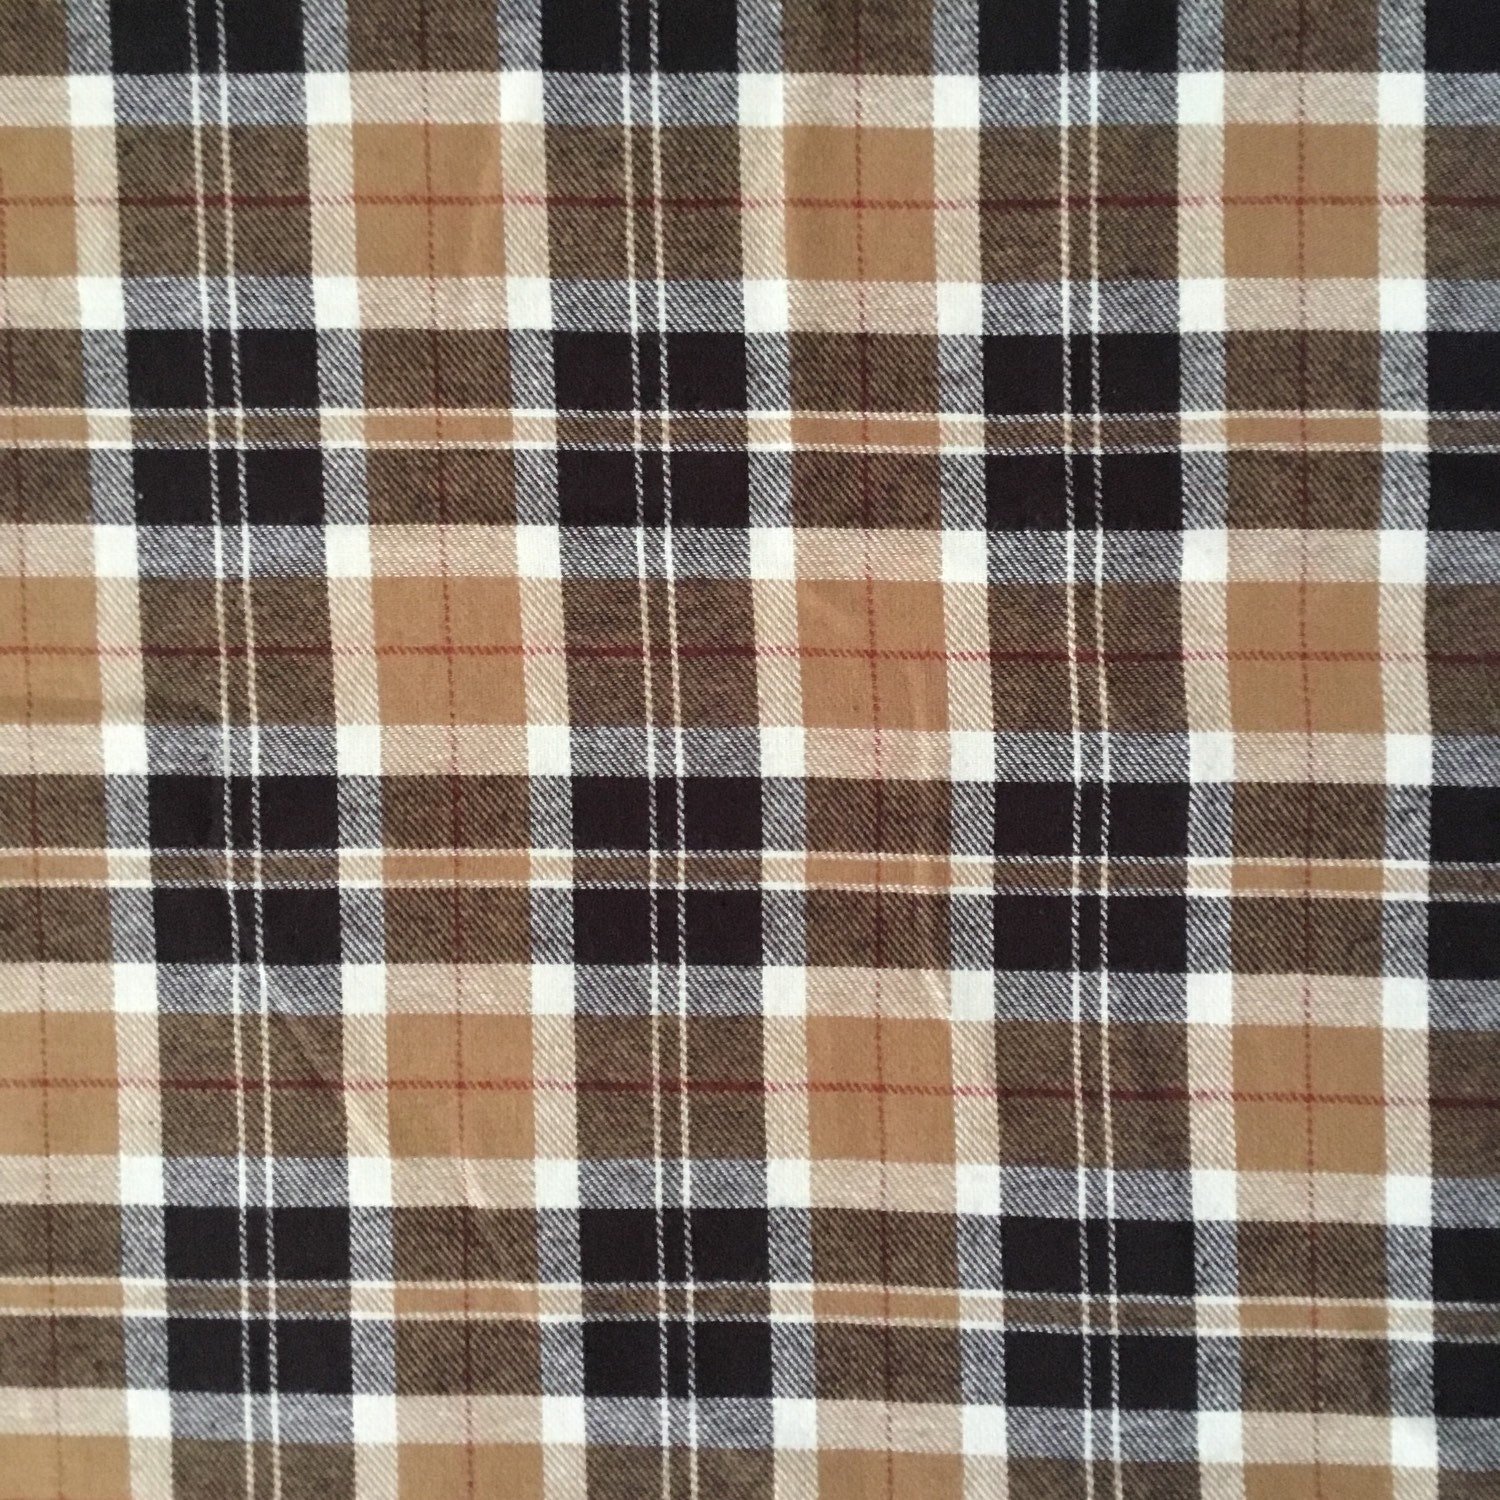 Earth Tone Tan Brown Maroon Plaid 100% Cotton Flannel Fabric